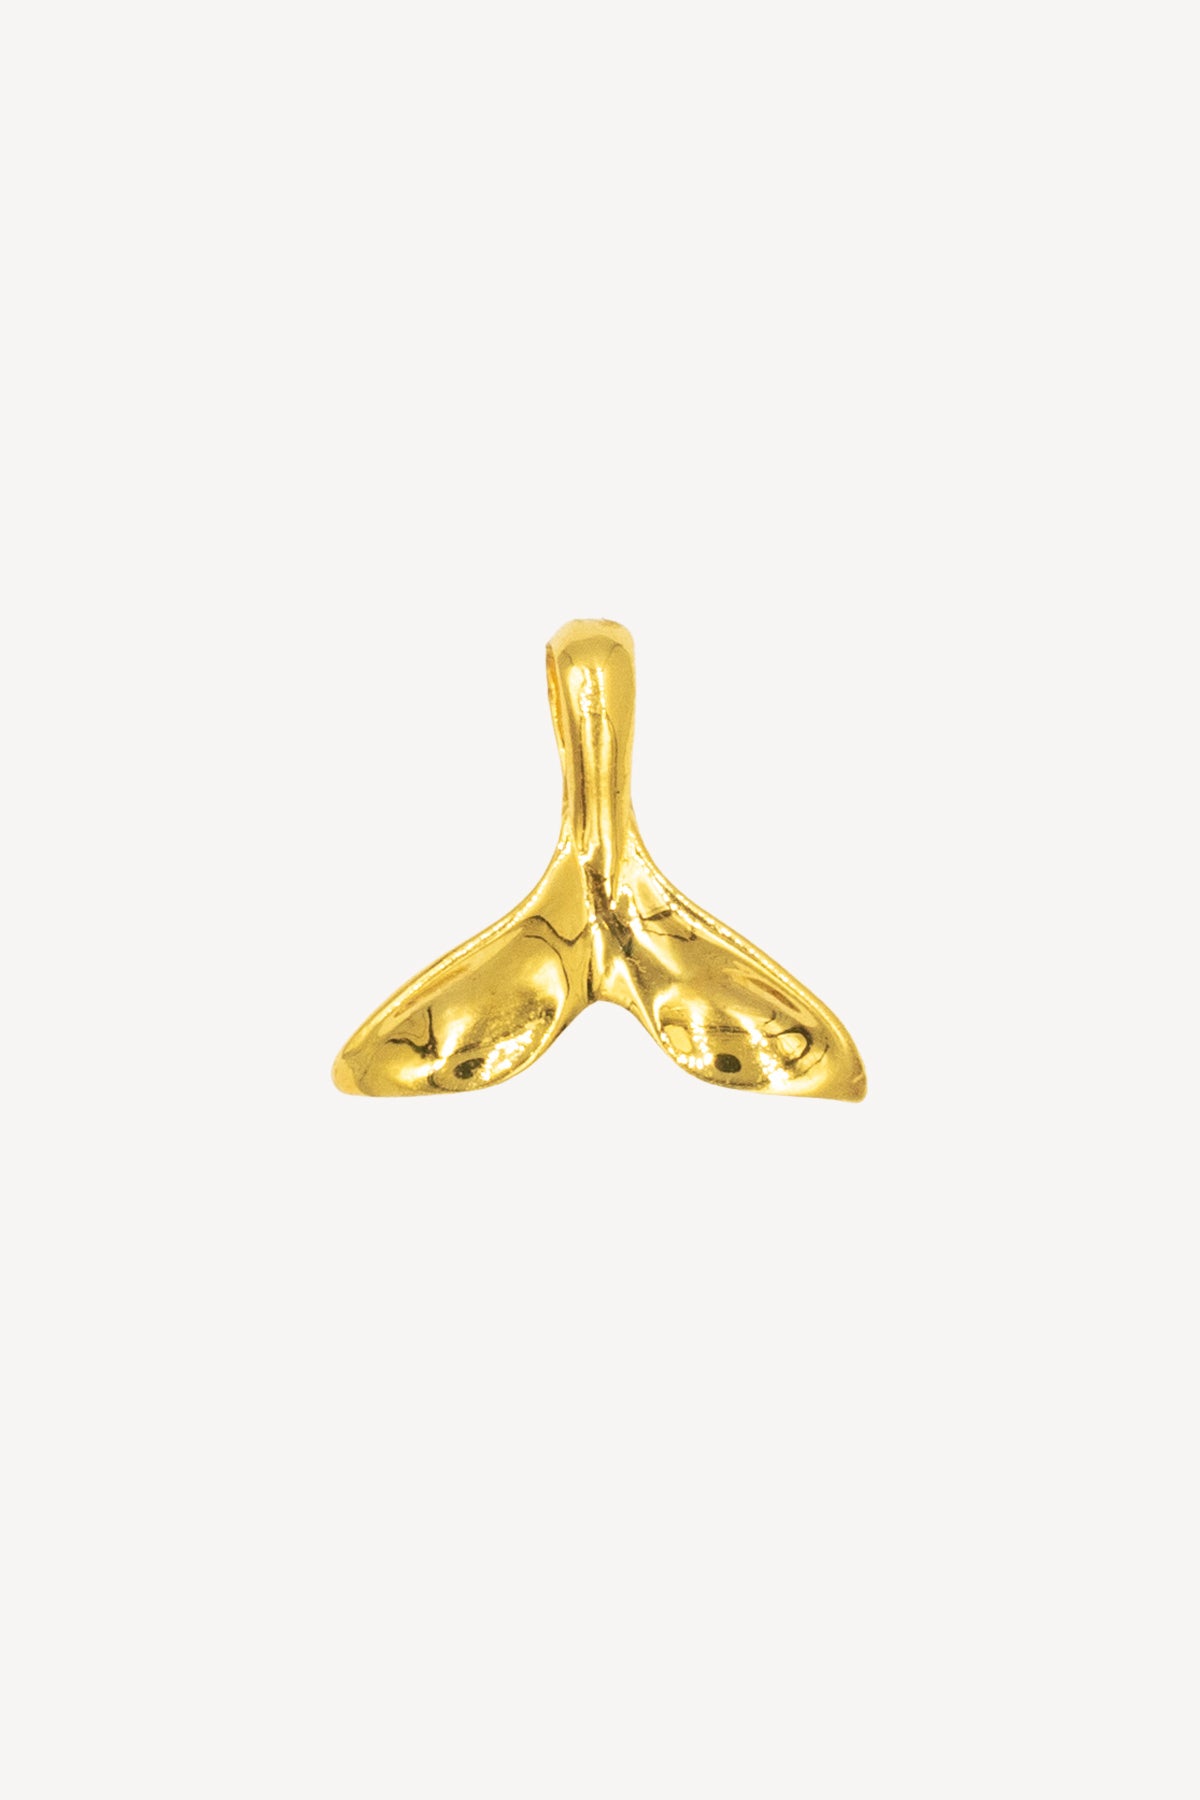 999 Gold Mermaid Tail Pendant